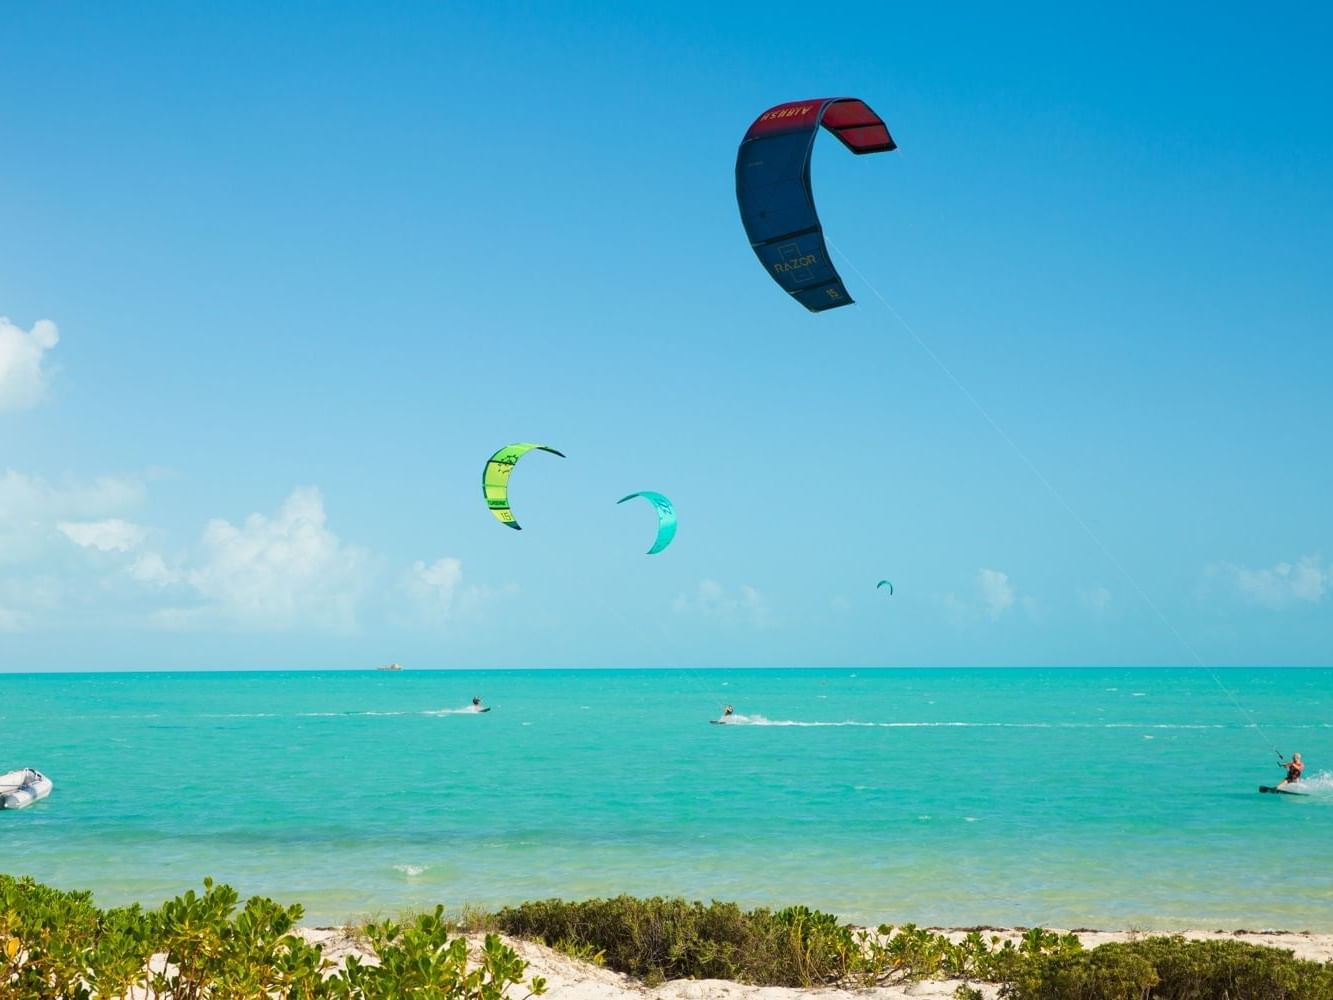 Kitesurfing enthusiasts near H2O Life Style Resort